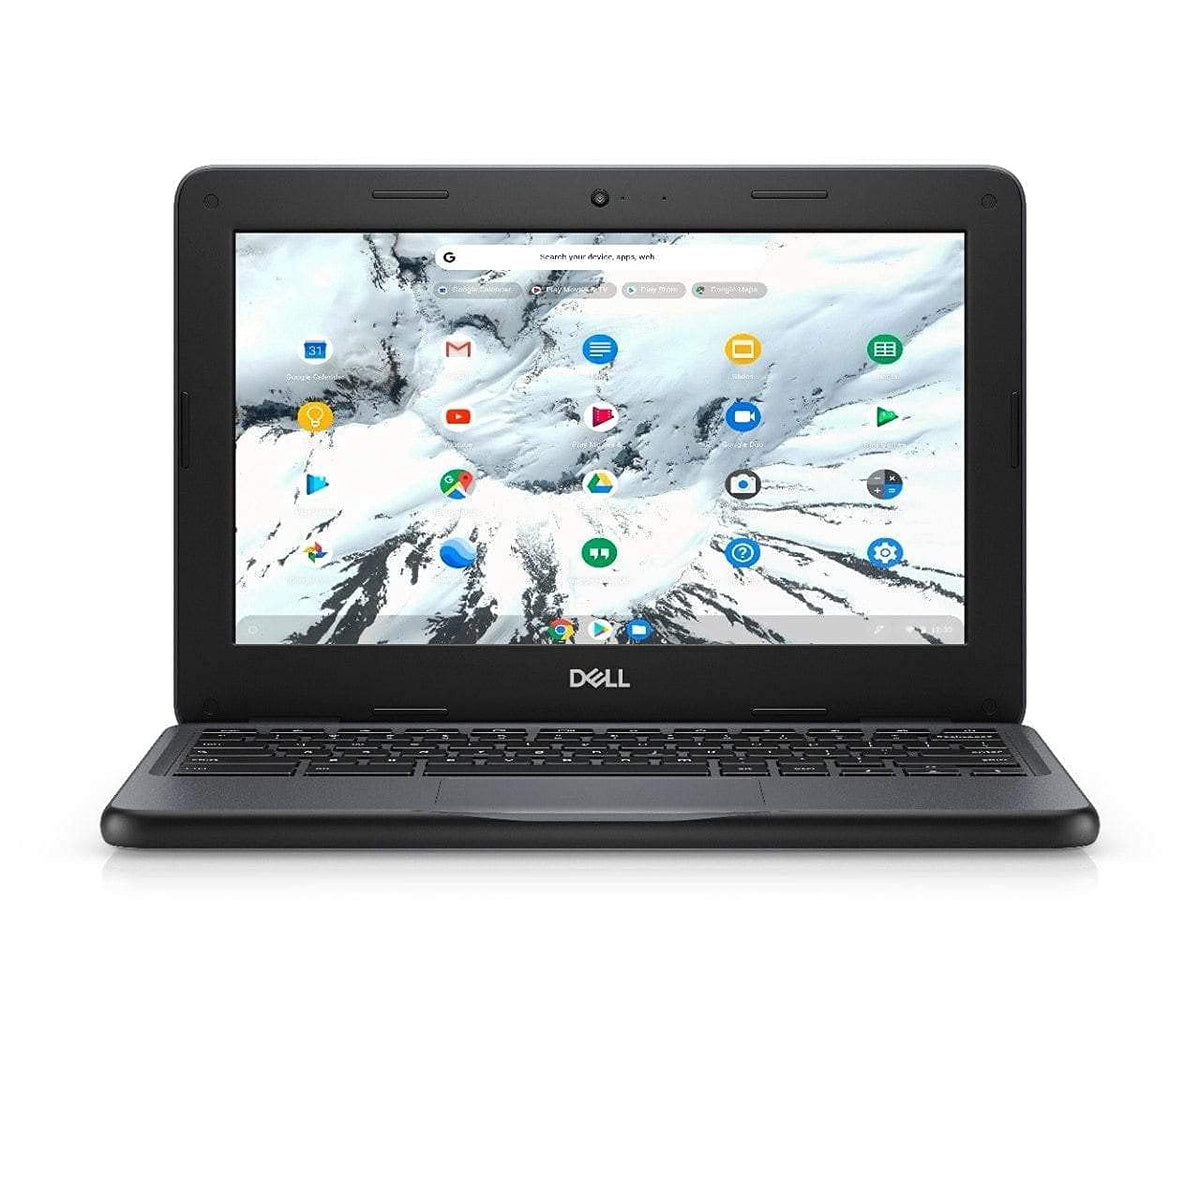 Dell Chromebook 11 3100 11.6" Touchscreen Chromebook - HD - 1366 x 768 - Celeron - 4GB RAM - 32GB Flash Memory (Renewed)